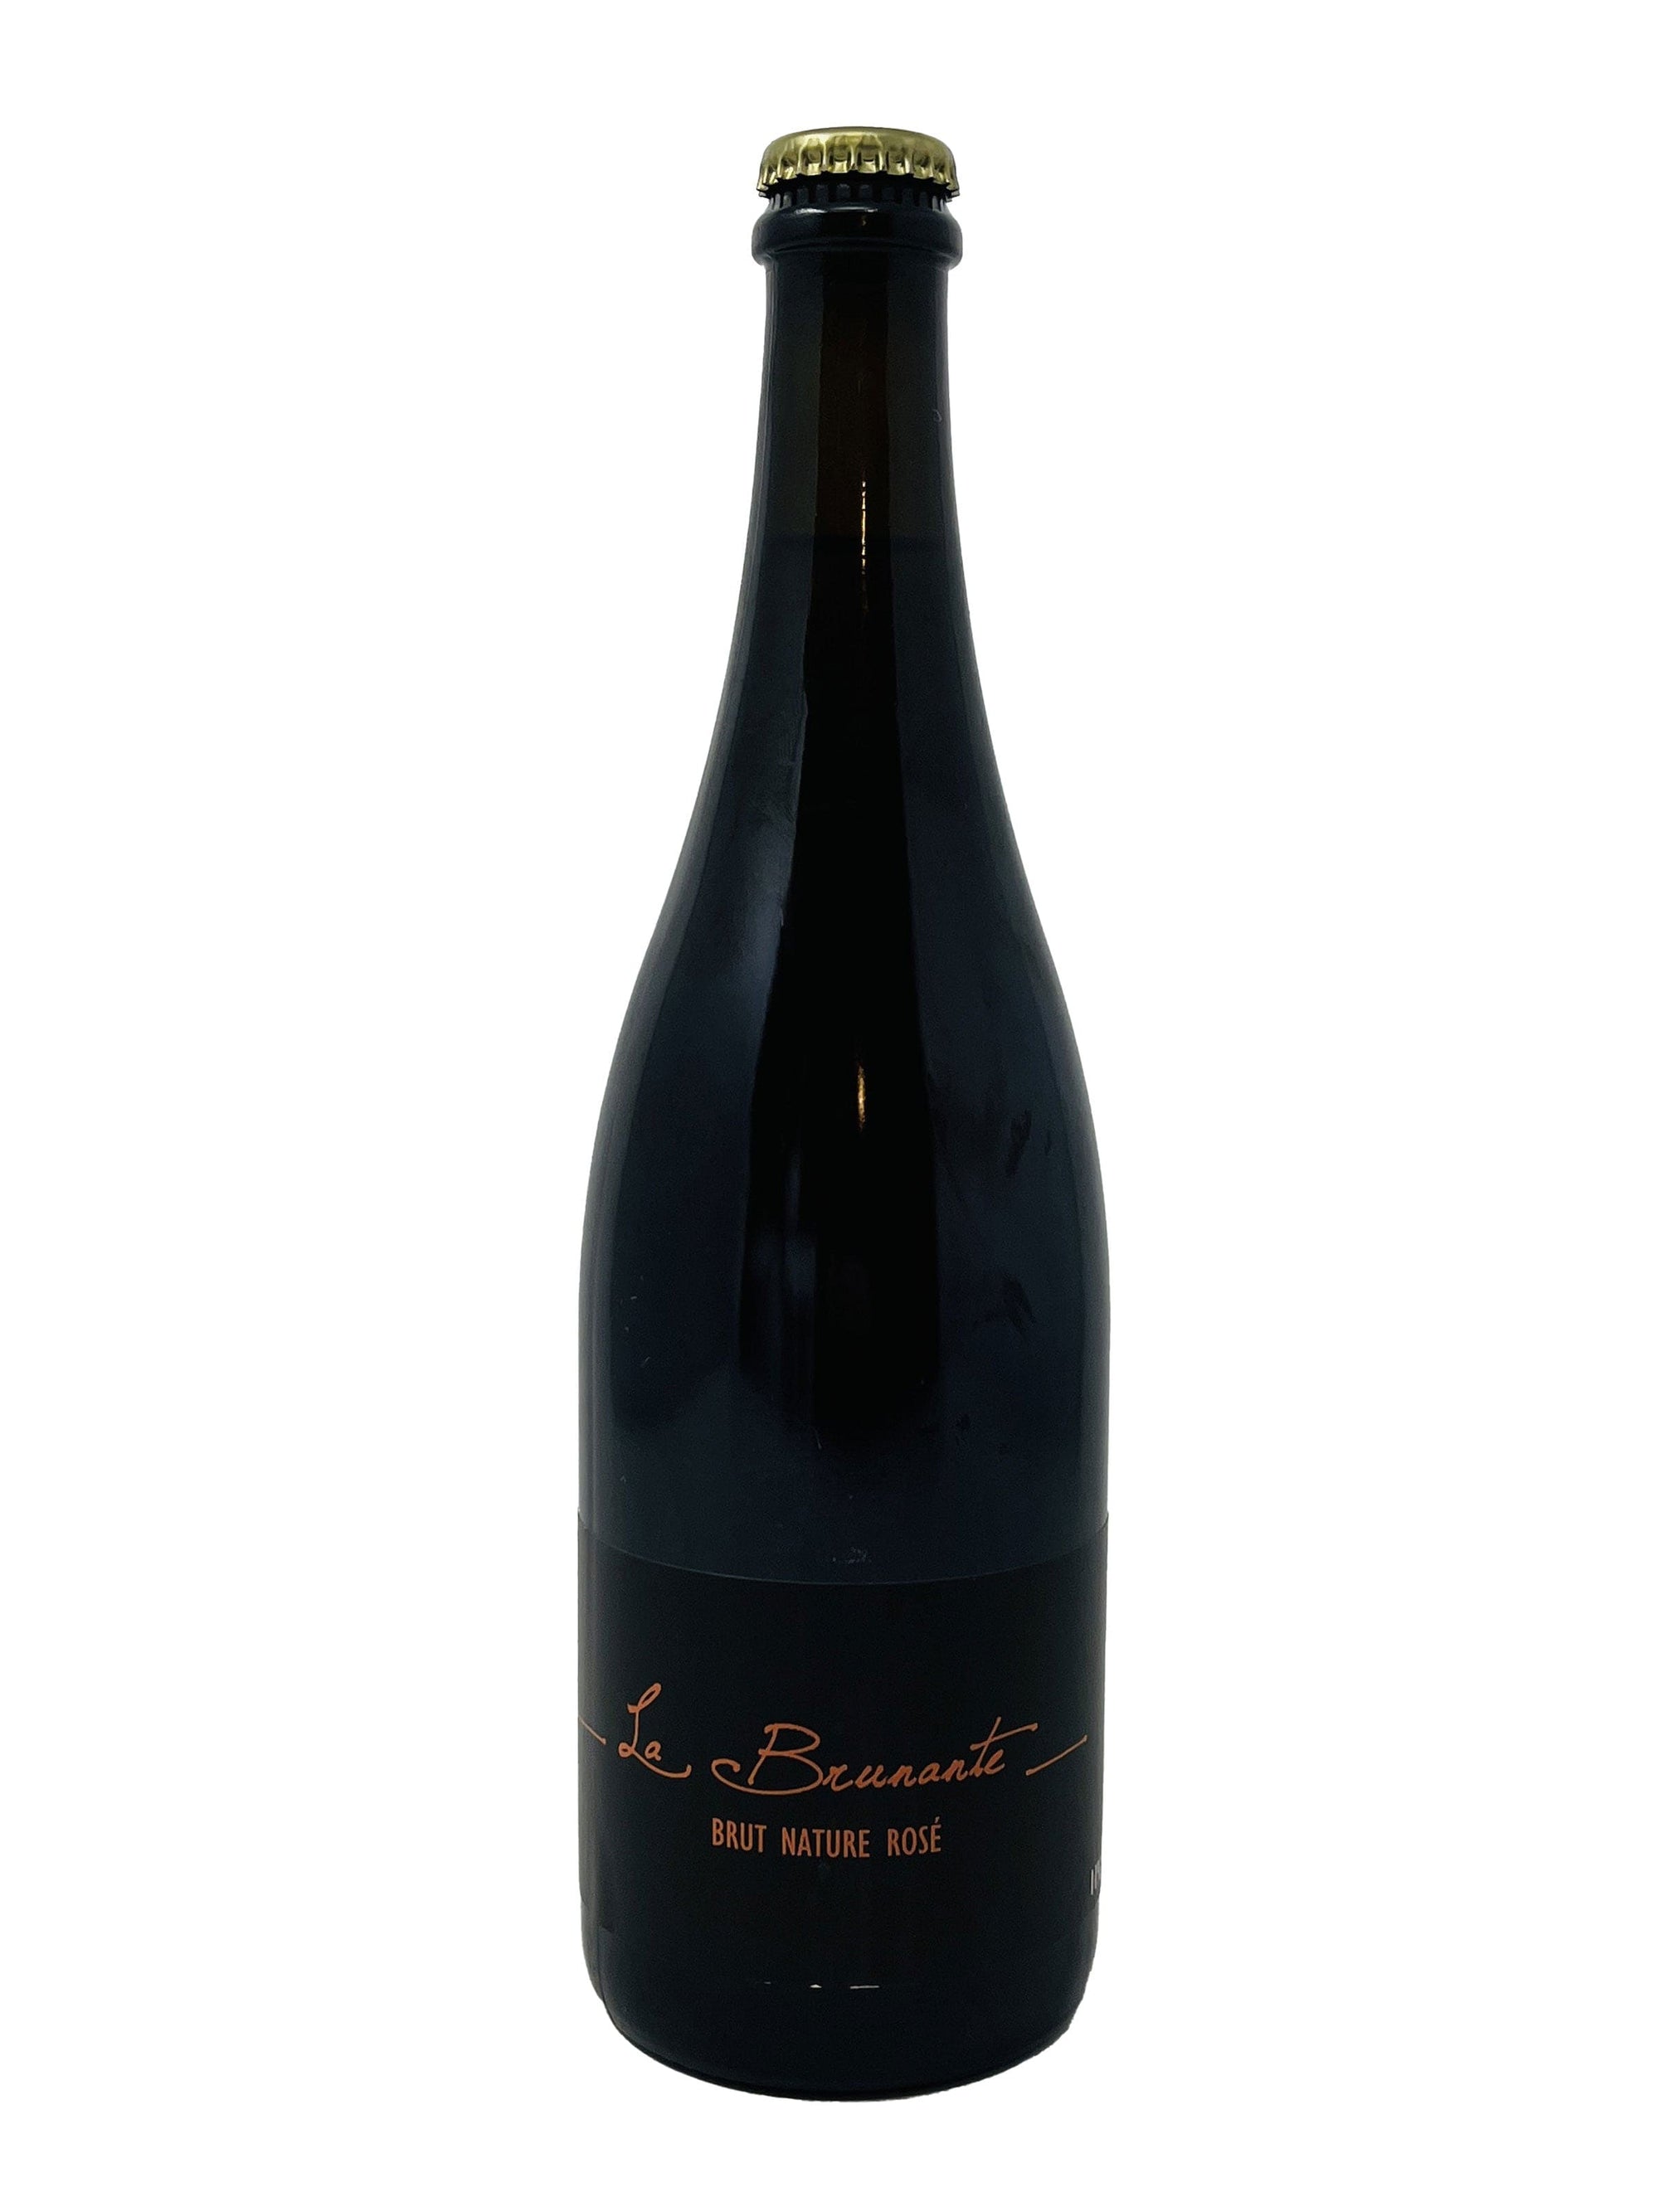 Vignoble Ste-Angélique vin La Brunante 2020 - Vin rosé effervescent du Vignoble Ste-Angélique